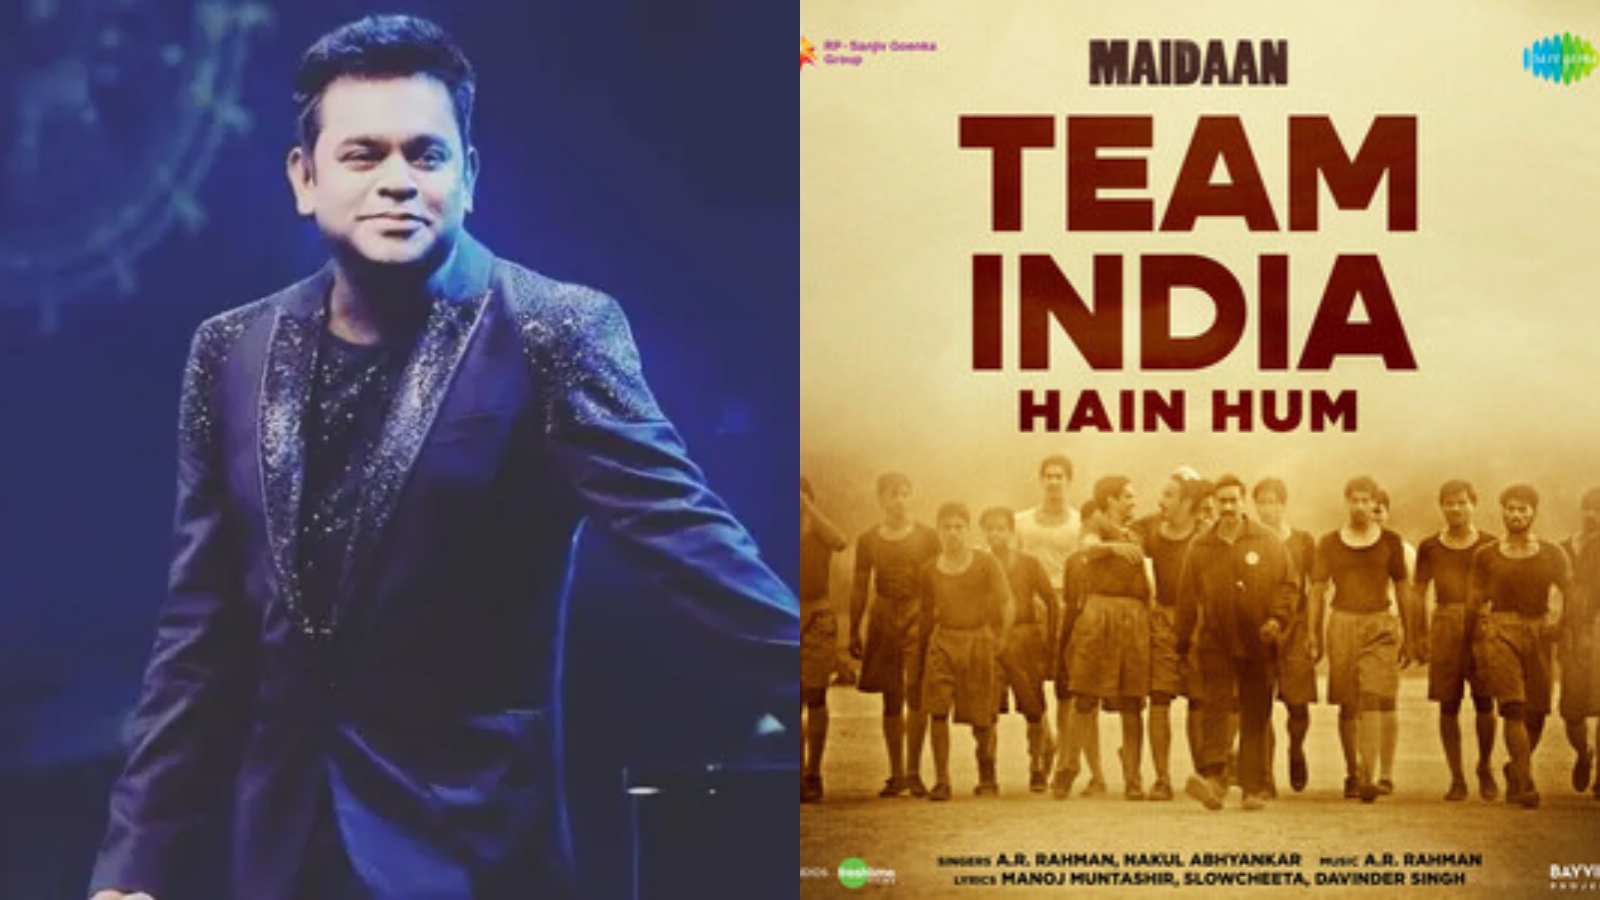 AR Rahman launches Maidaans' new track Team India Hain Hum, calls it a soulful sports anthem |  Bollywood News